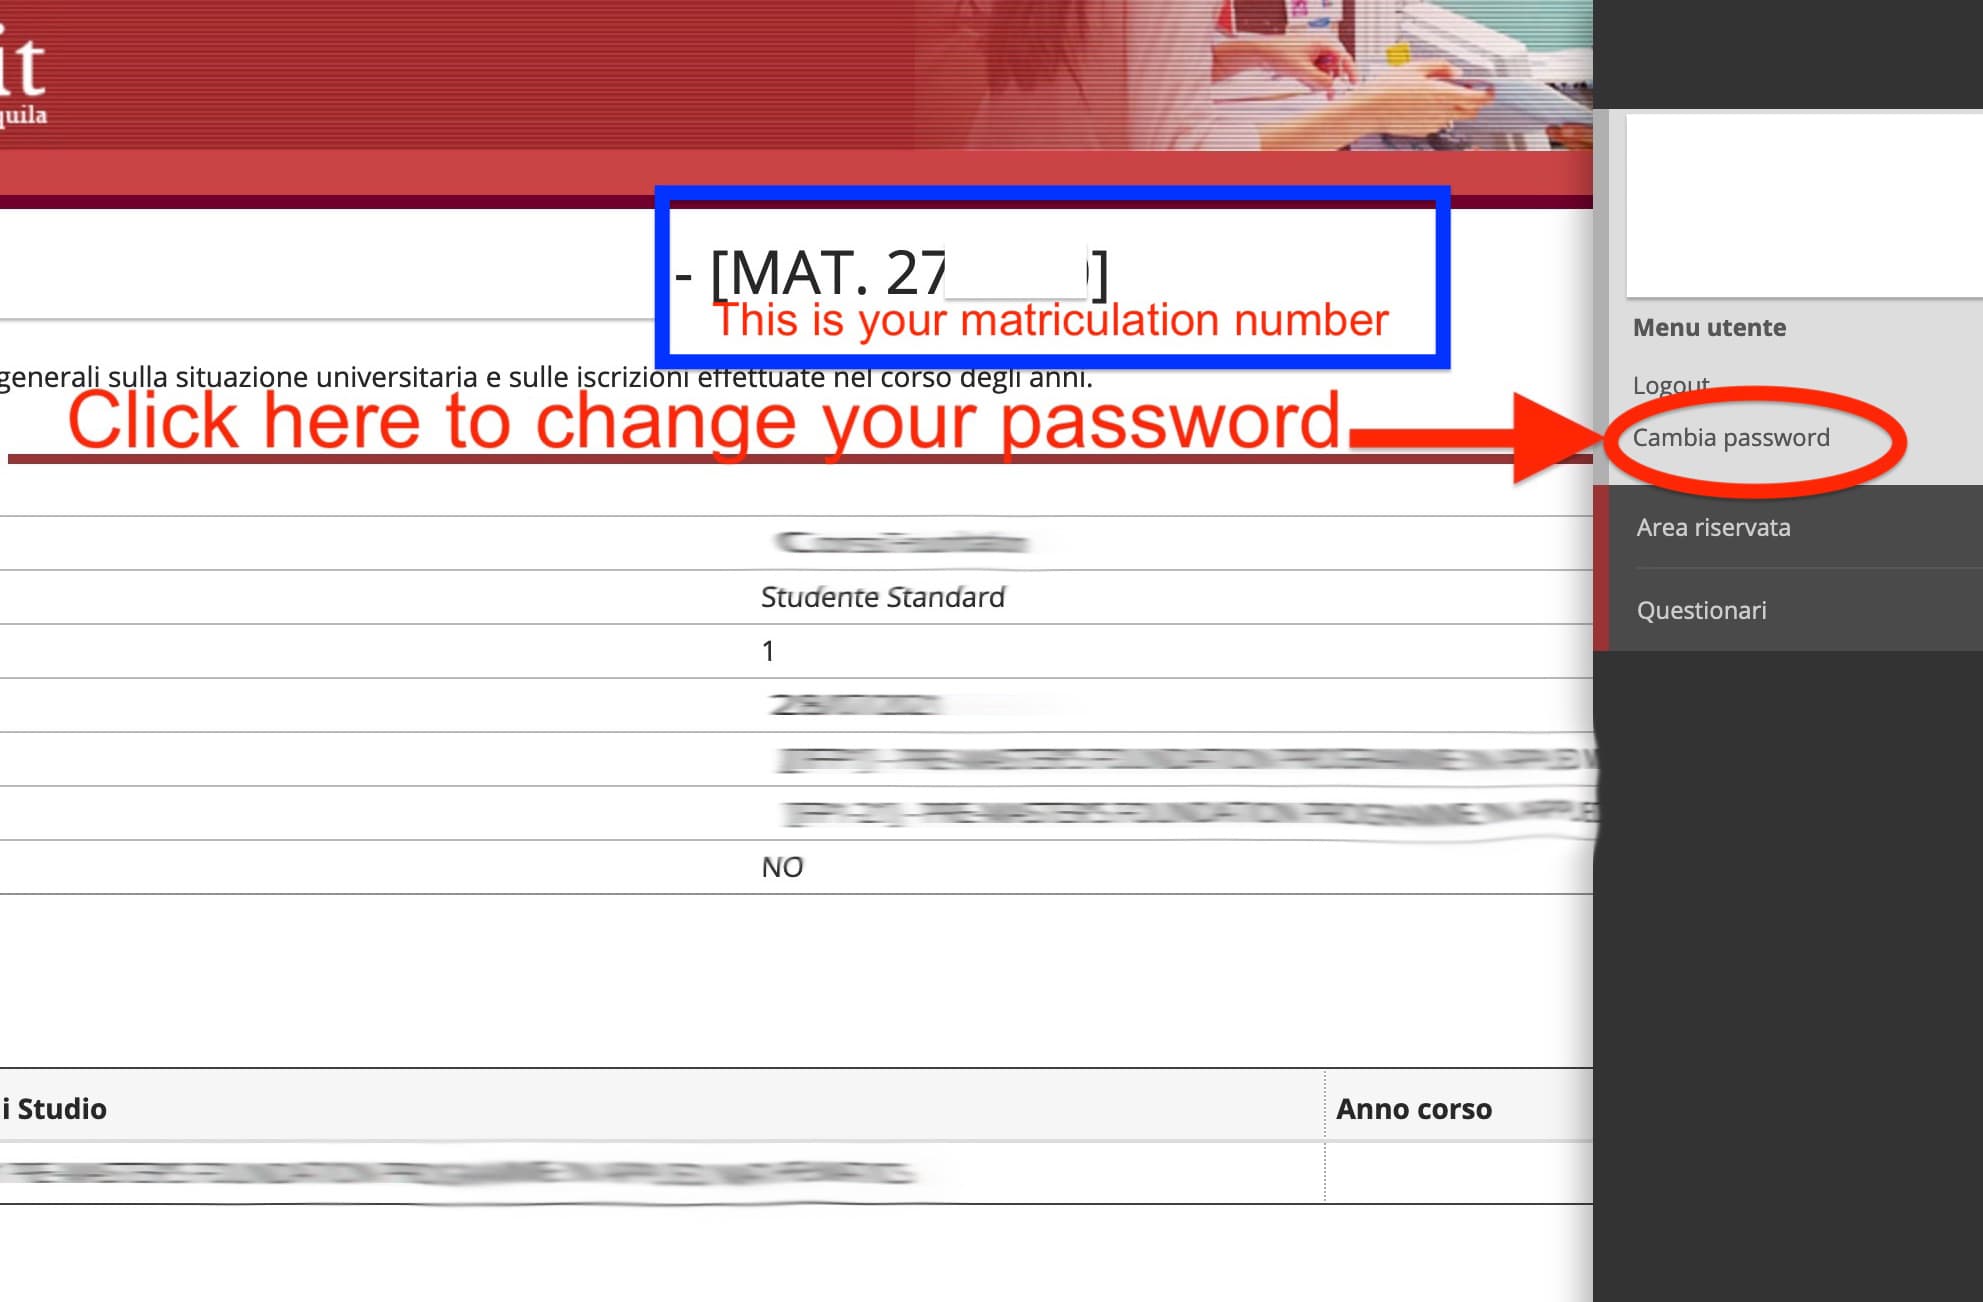 3 - Change your password